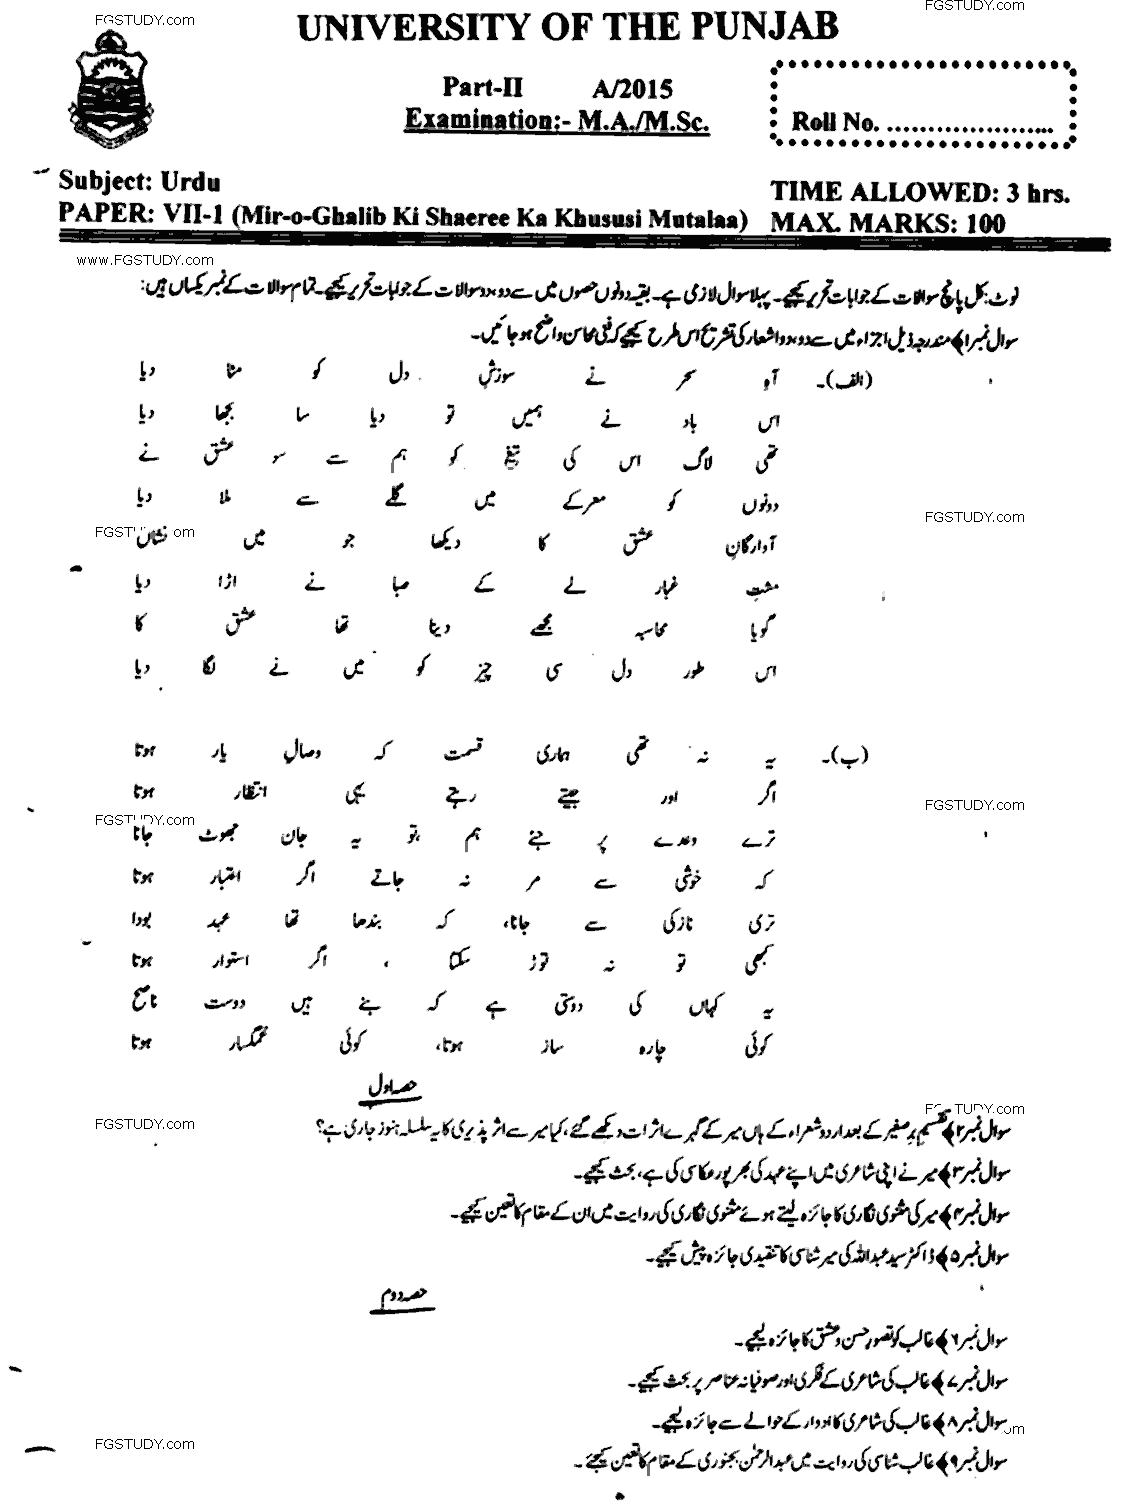 MA Part 2 Urdu Mir O Ghalib Key Shaeree Ka Khususi Mutalaa Past Paper 2015 Punjab University